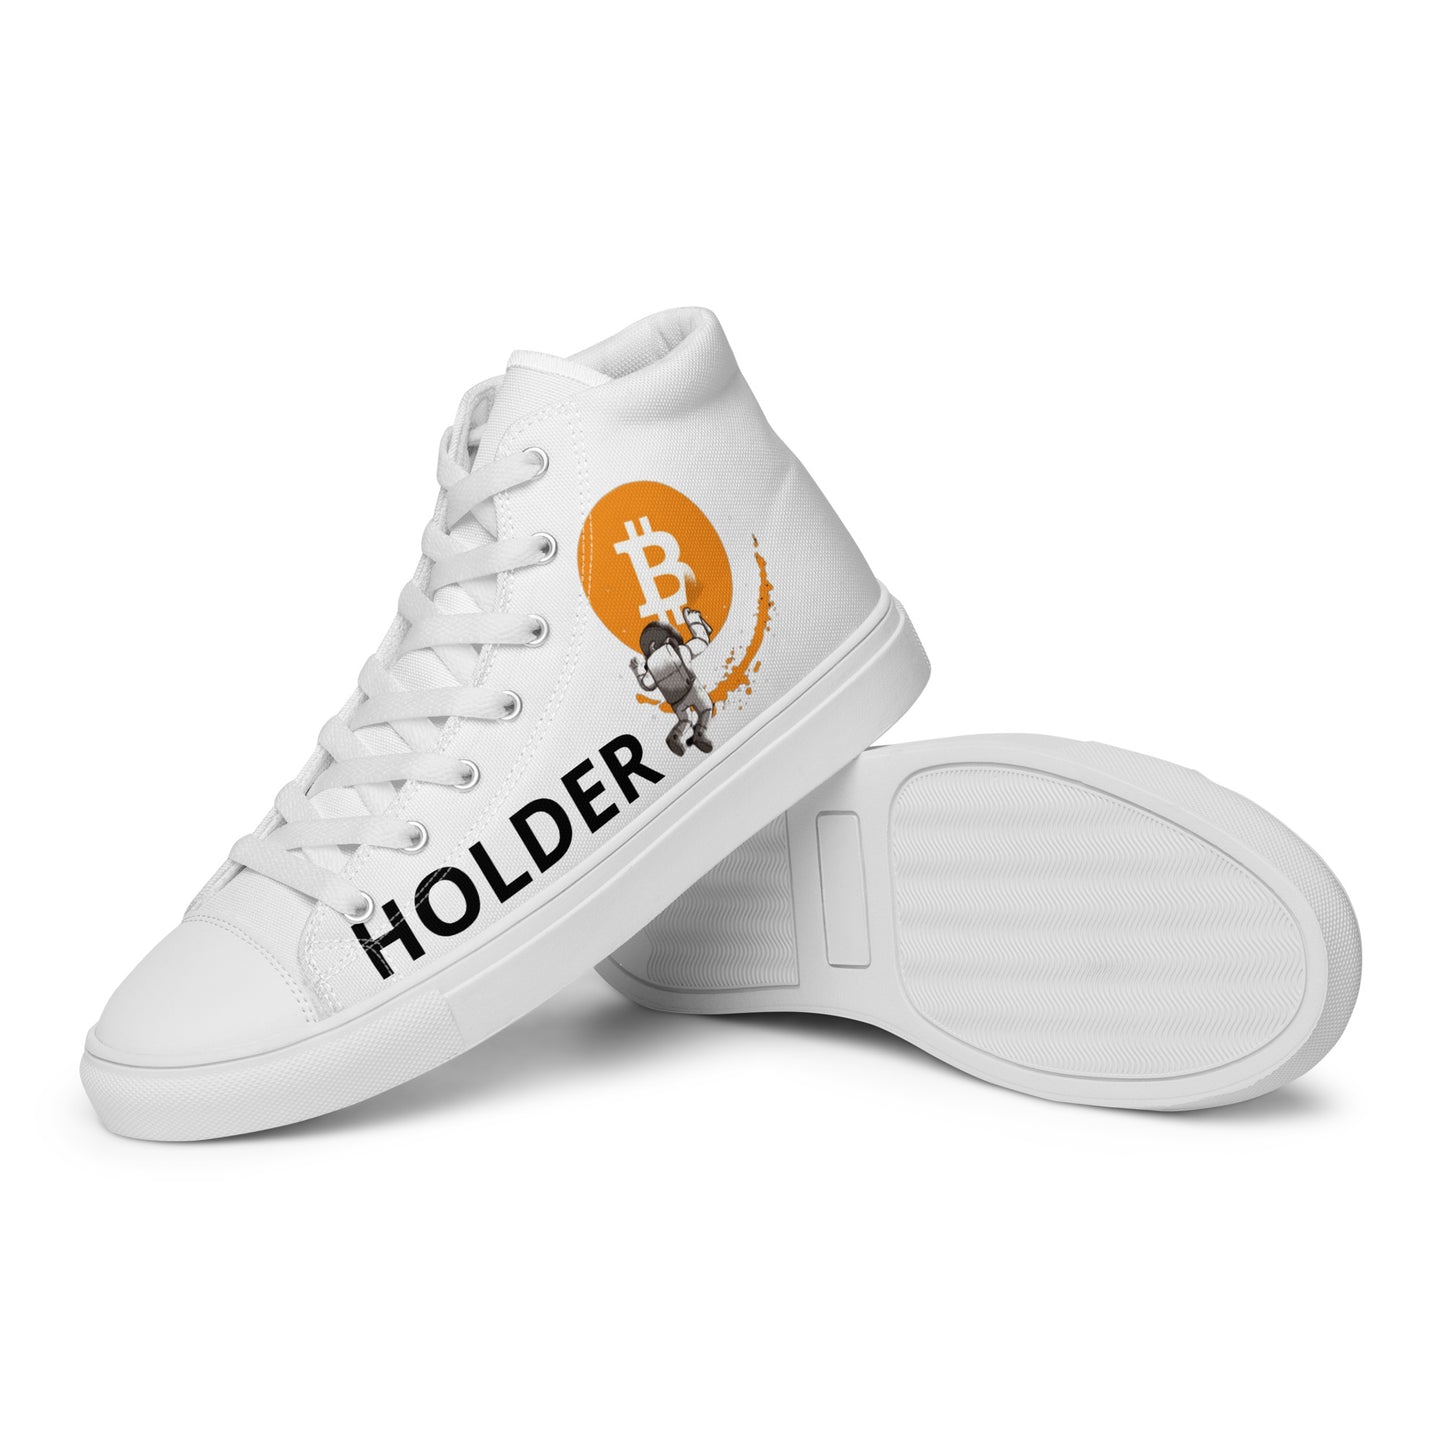 Bitcoin Man Sneakers